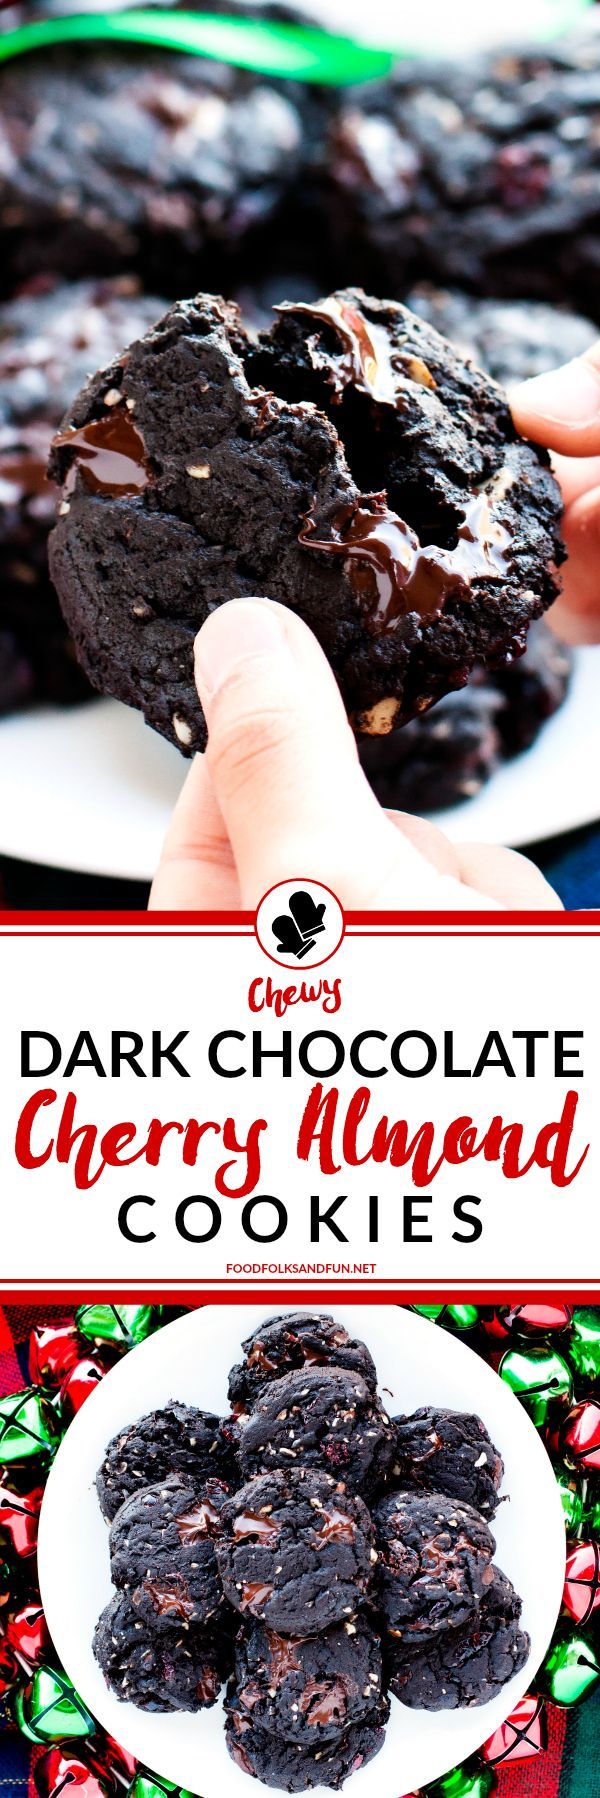 Dark Chocolate Cherry Cookies with Almonds